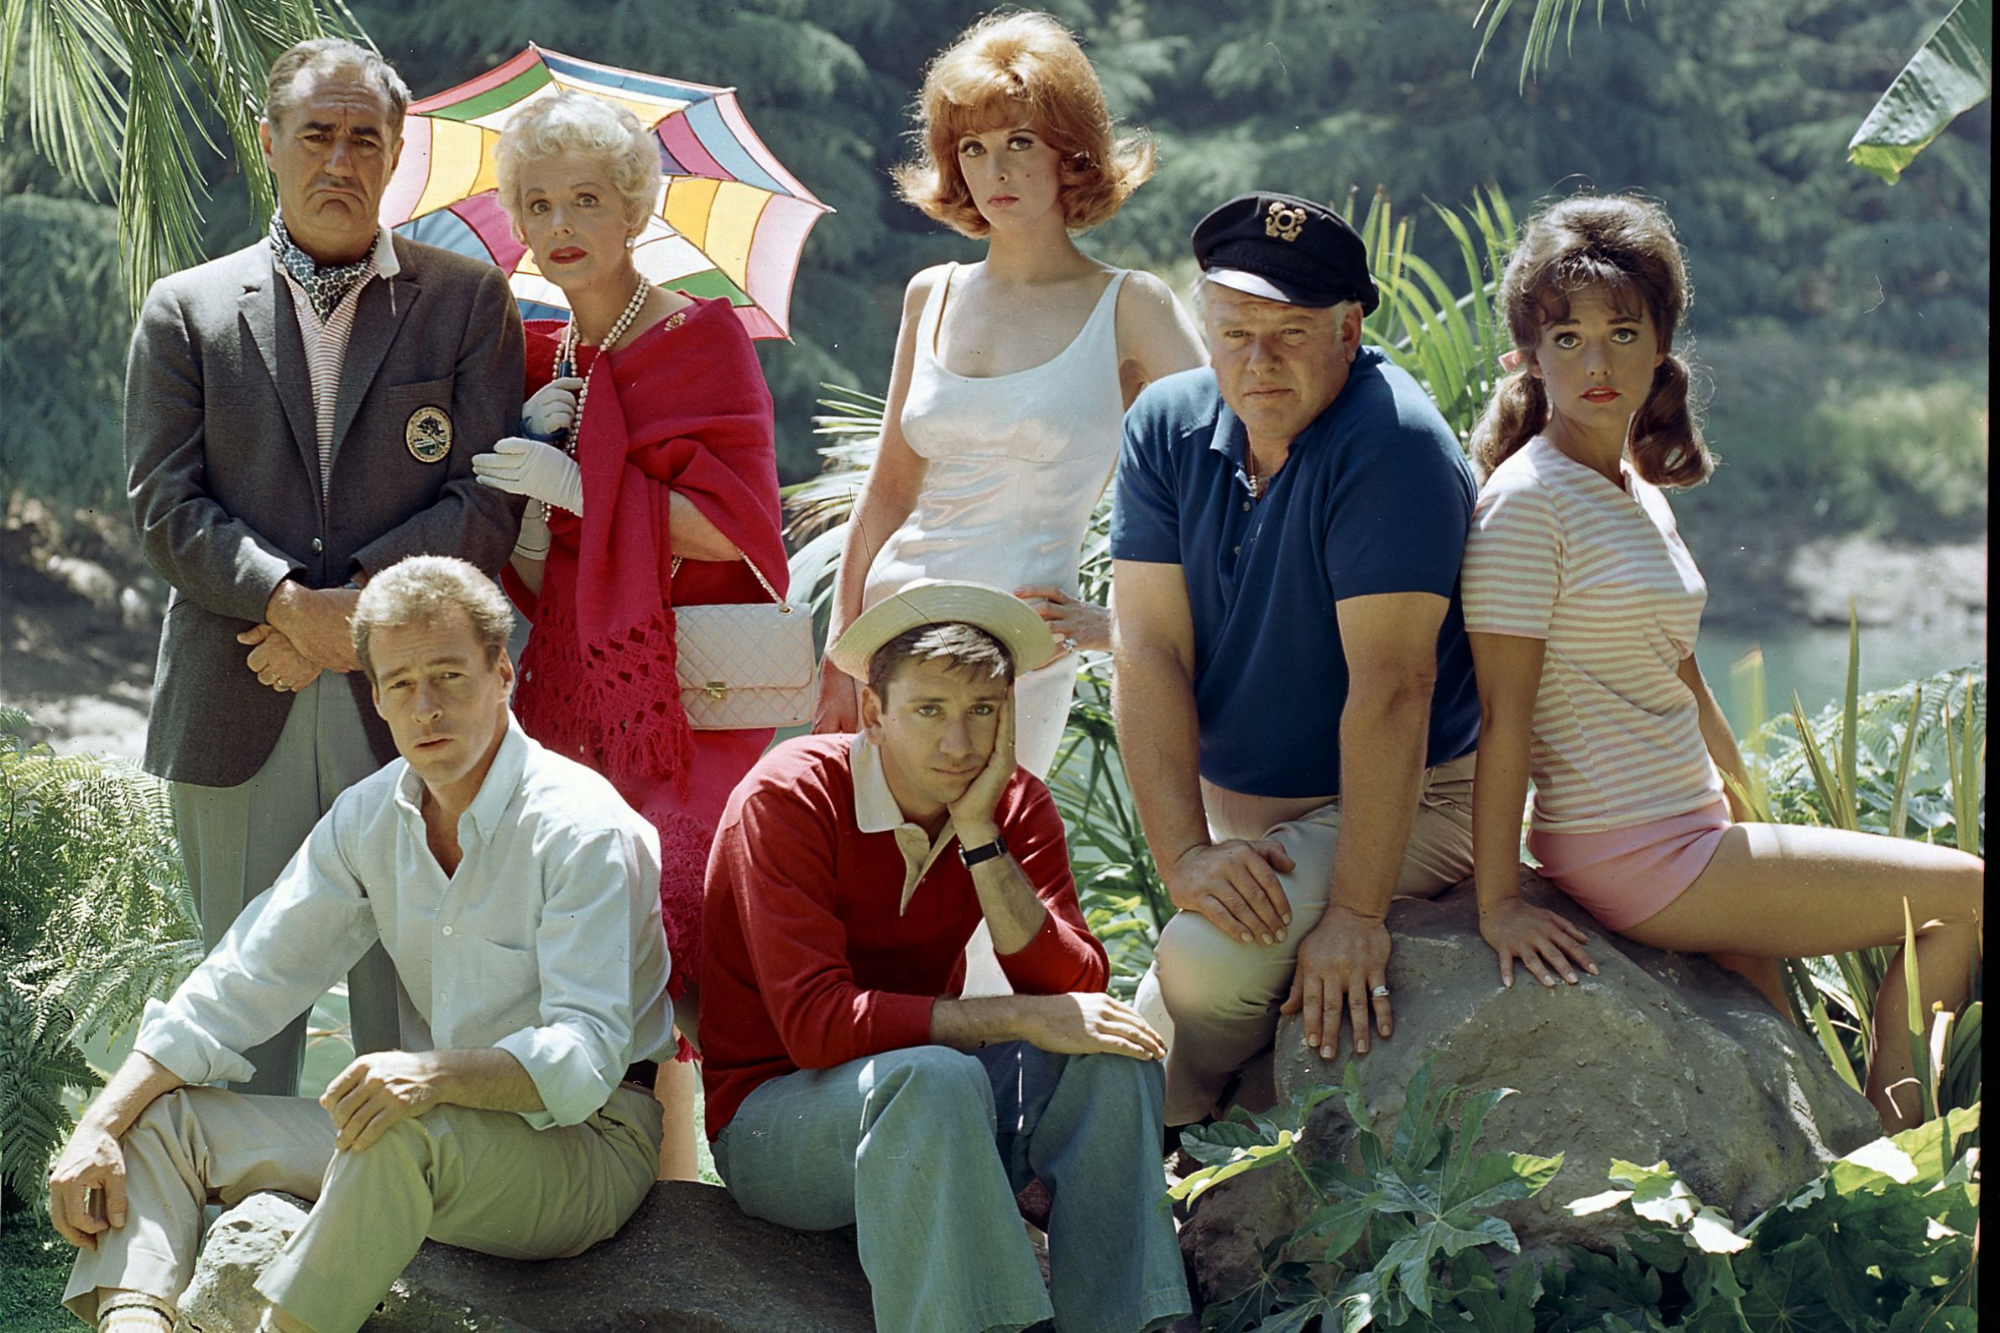 'Gilligan's Island' cast Jim Backus, Natalie Schafer, Tina Louise, Alan Hale Jr, Dawn Wells, Russell Johnson, and Bob Denver sitting on rocks